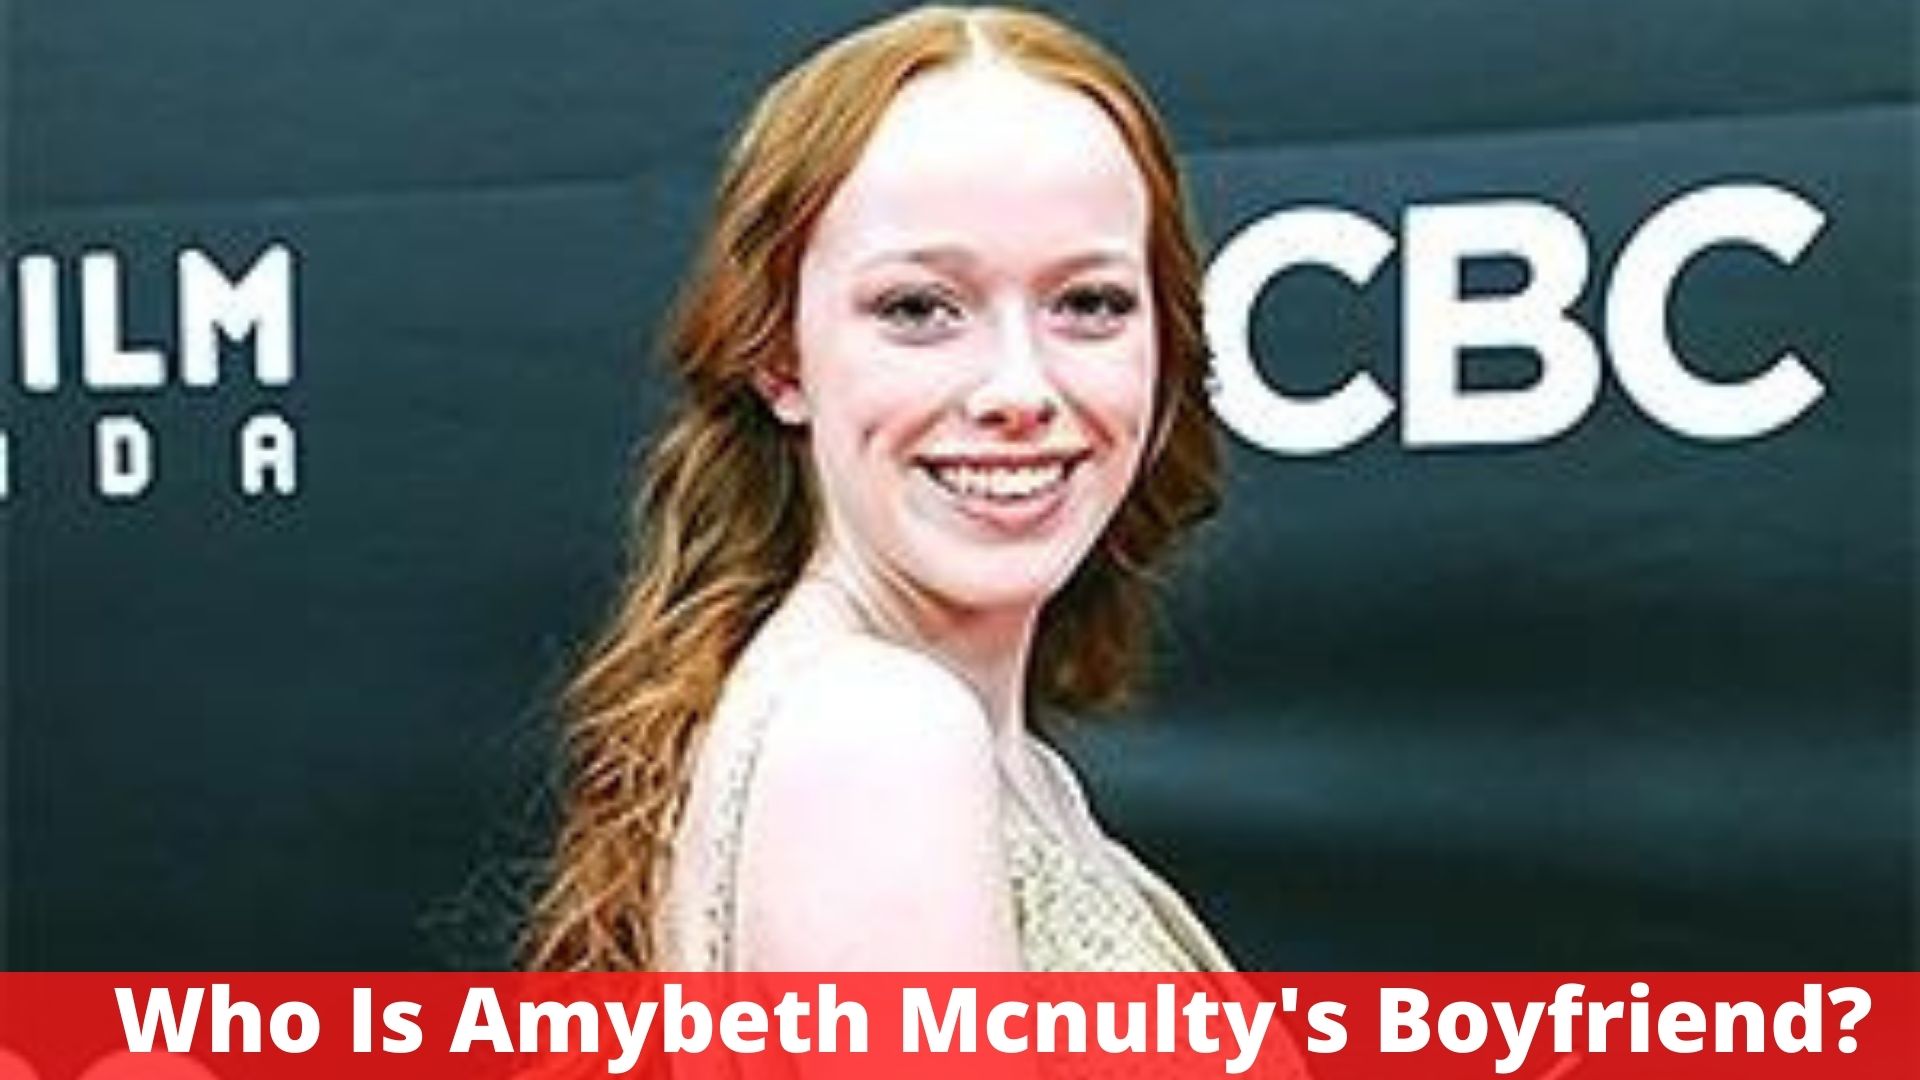 Who Is Amybeth Mcnulty's Boyfriend?